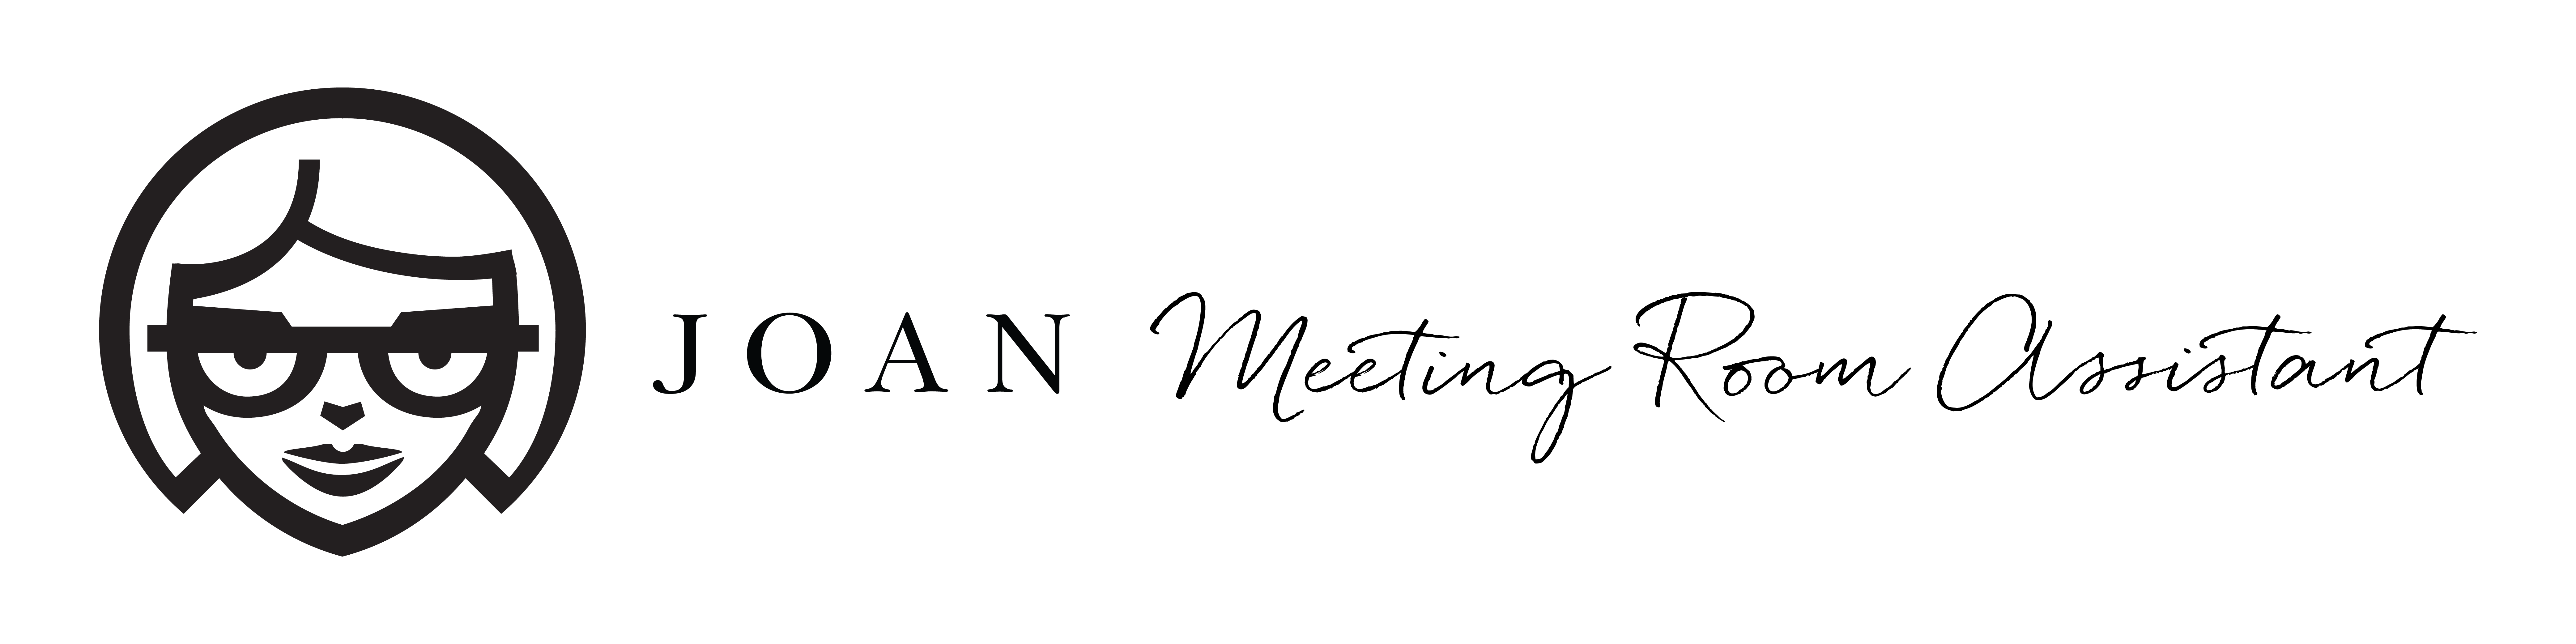 Joan Meeting Room Logo